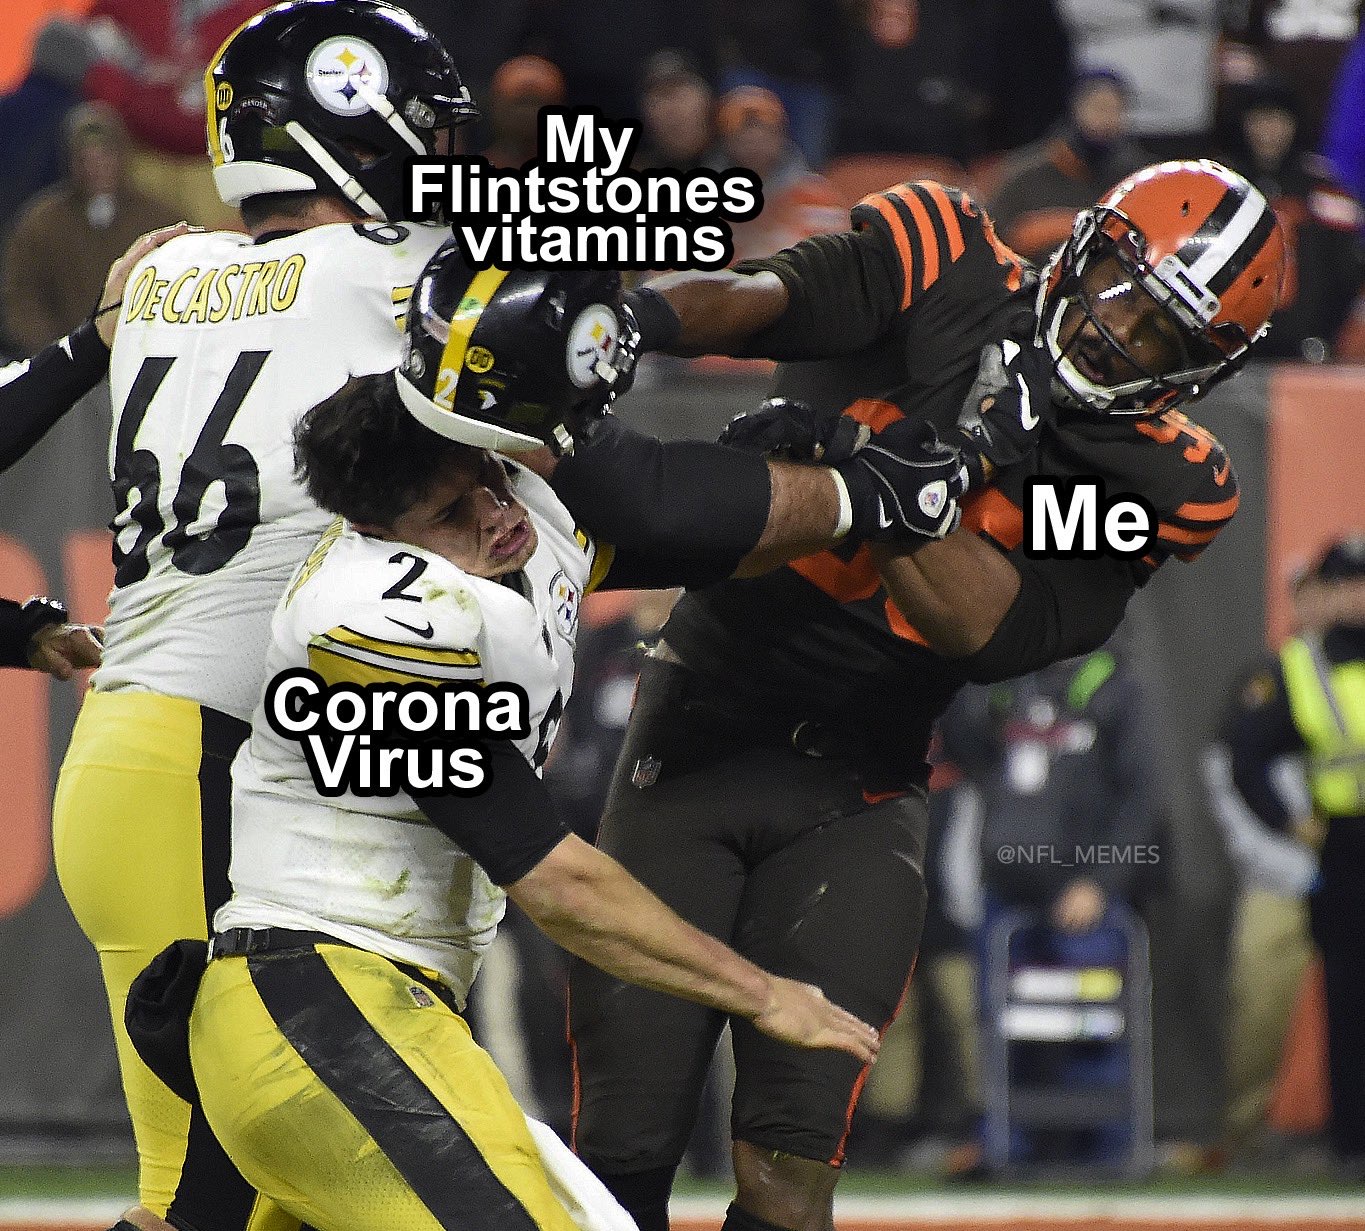 garrett rudolph - My Flintstones vitamins Oecastro Me 2 Corona Virus Onel Memes